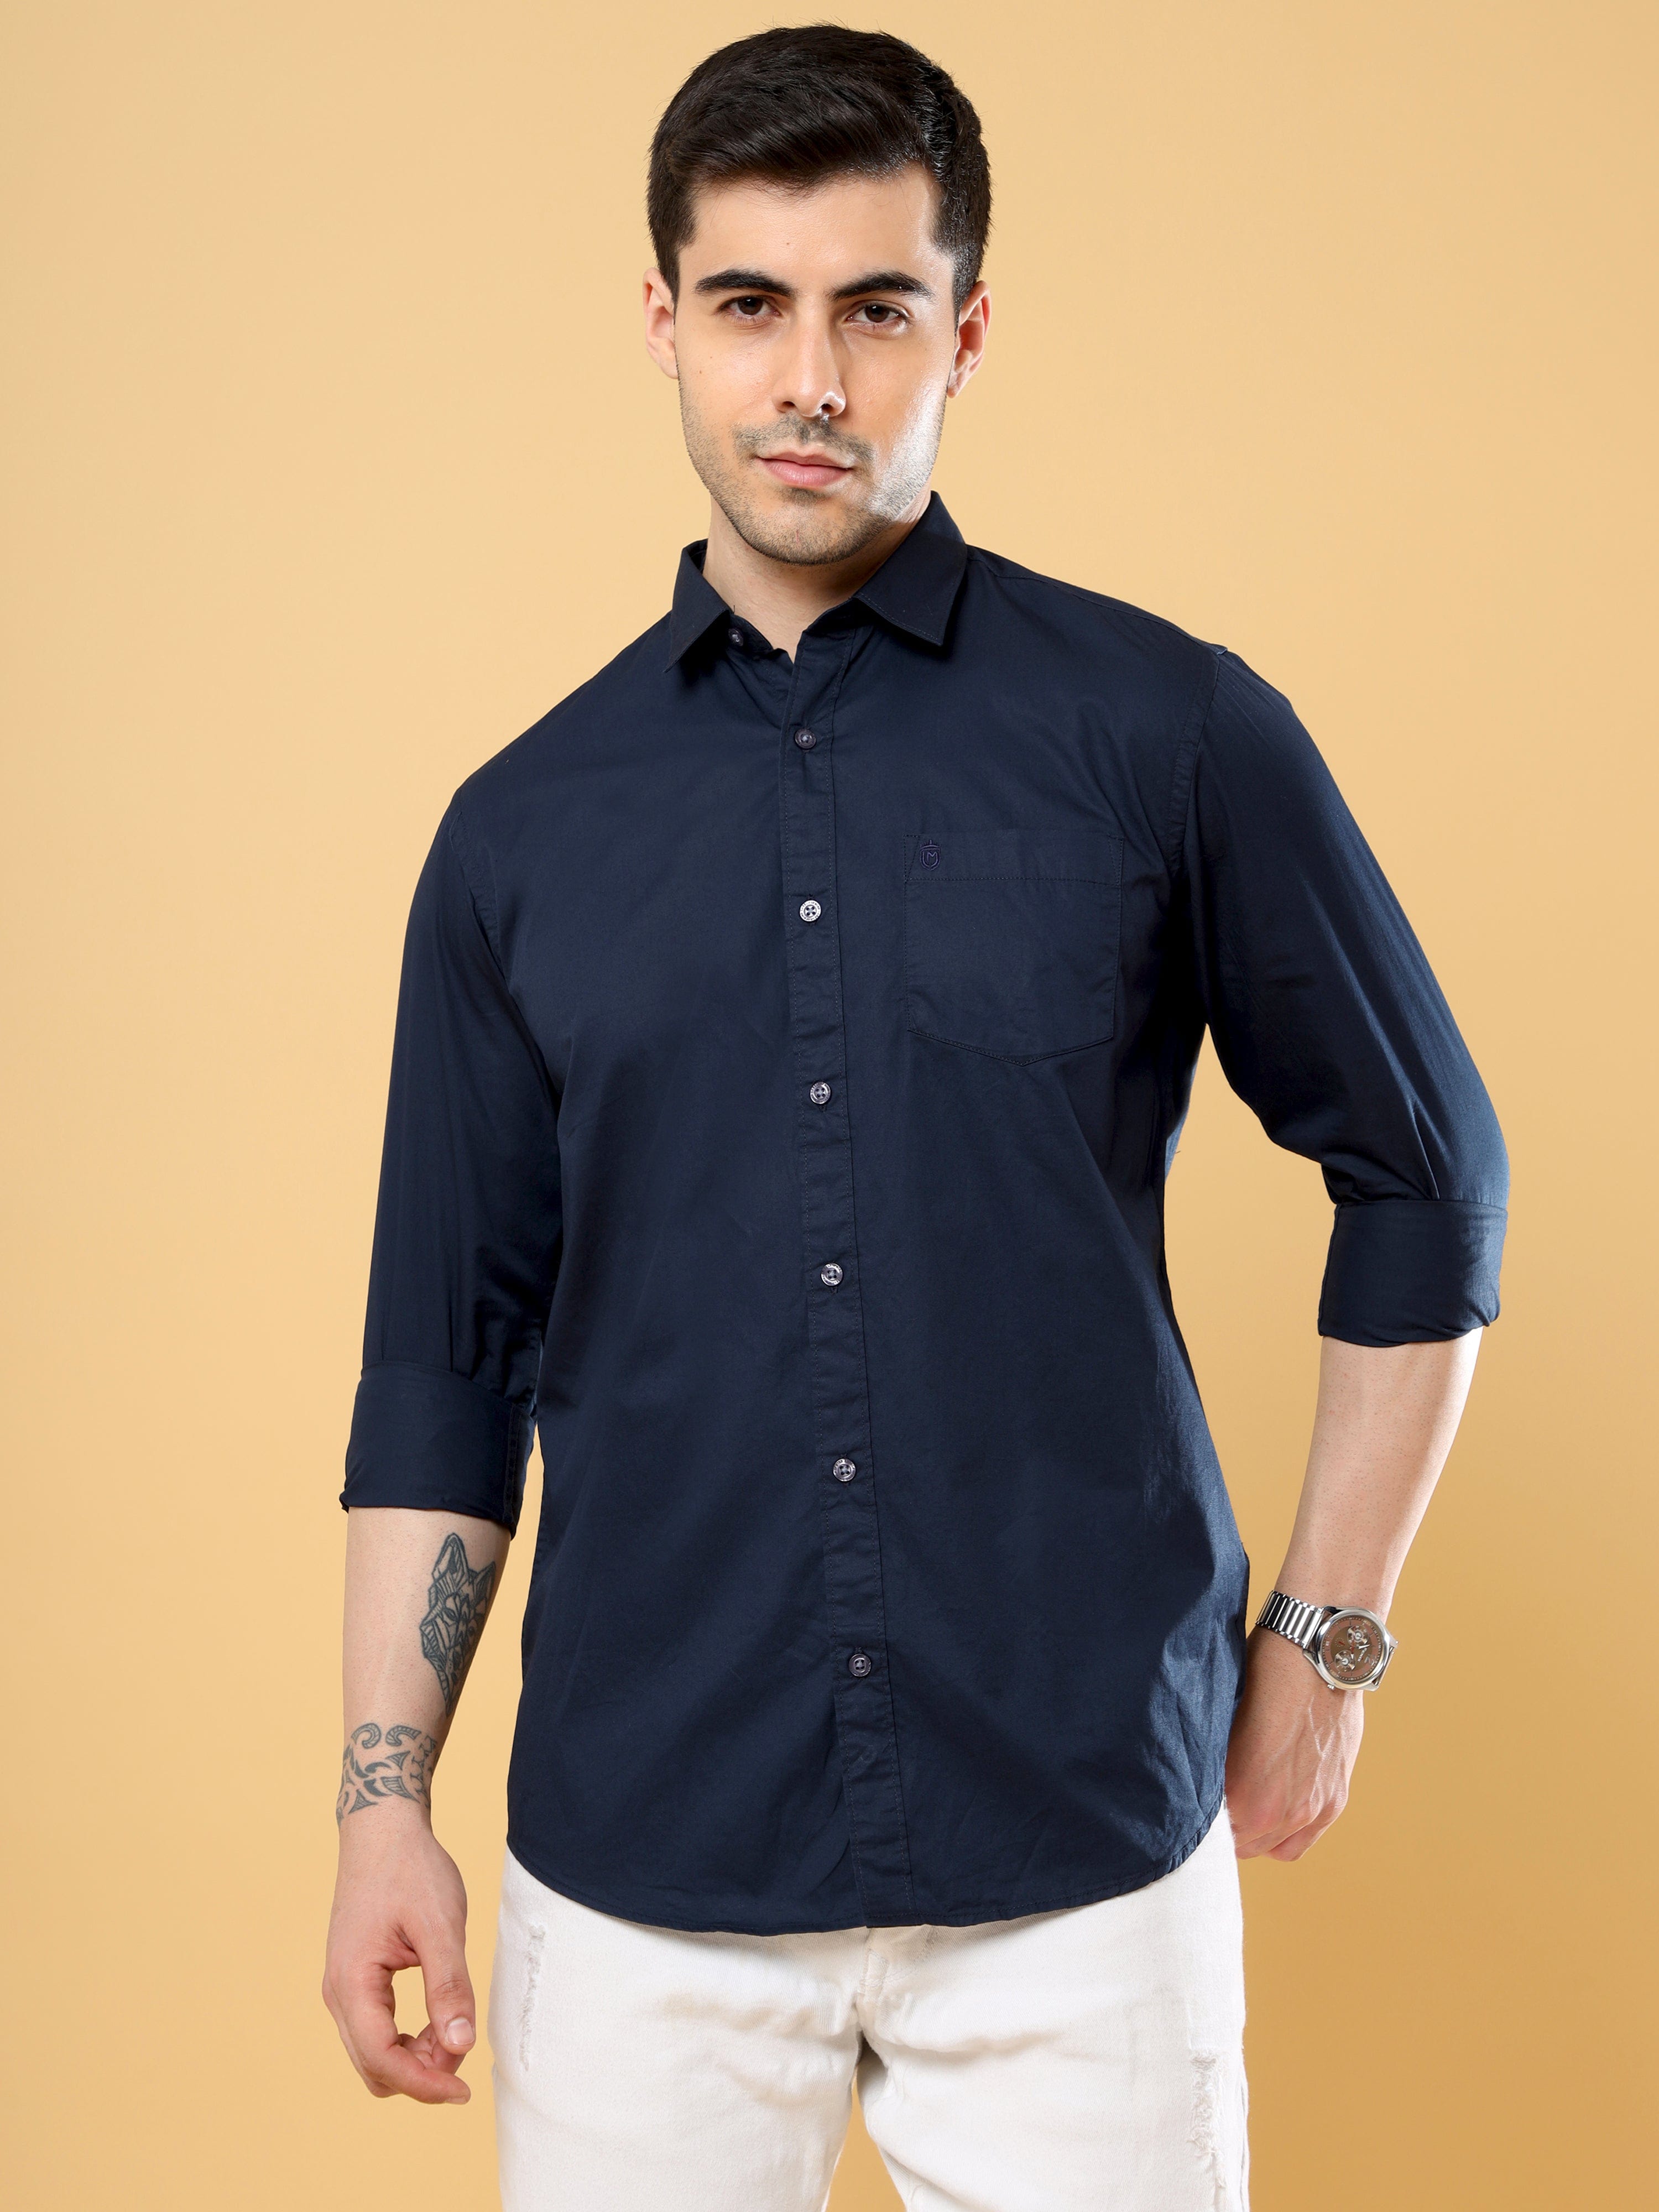 Shop Latest Solid Poplin Navy Blue Colour Shirt OnlineRs. 799.00